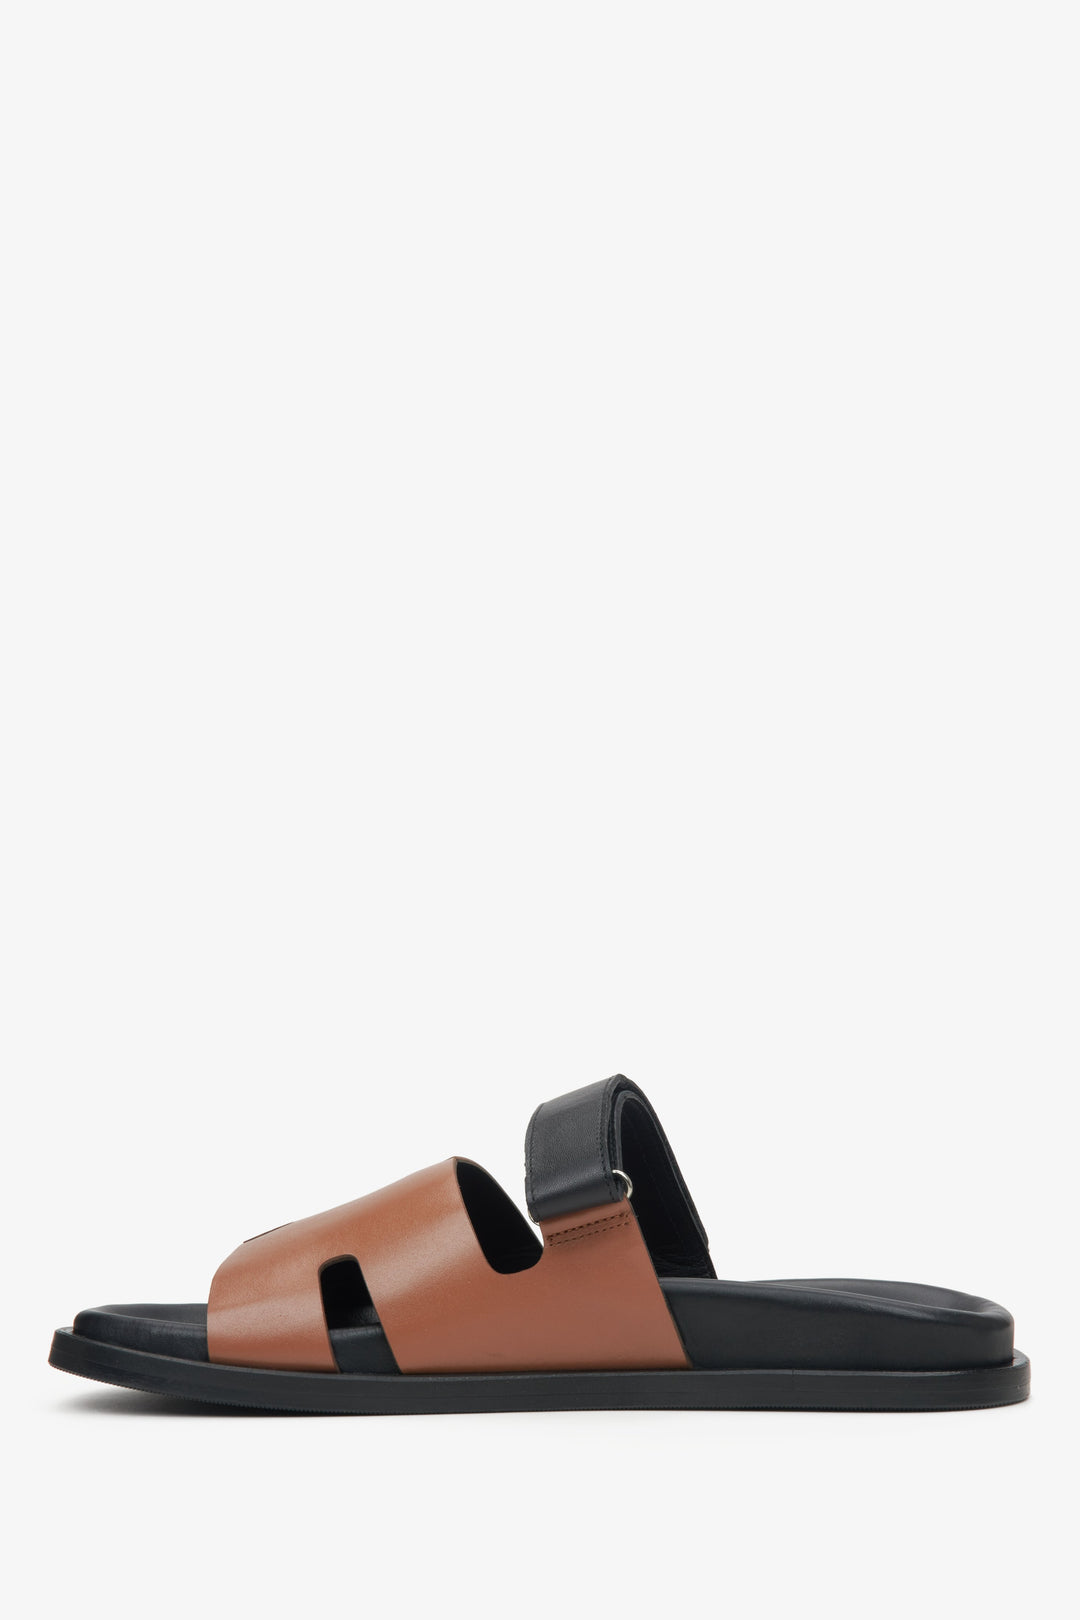 Women's brown and black slide sandals Estro - shoe profile.